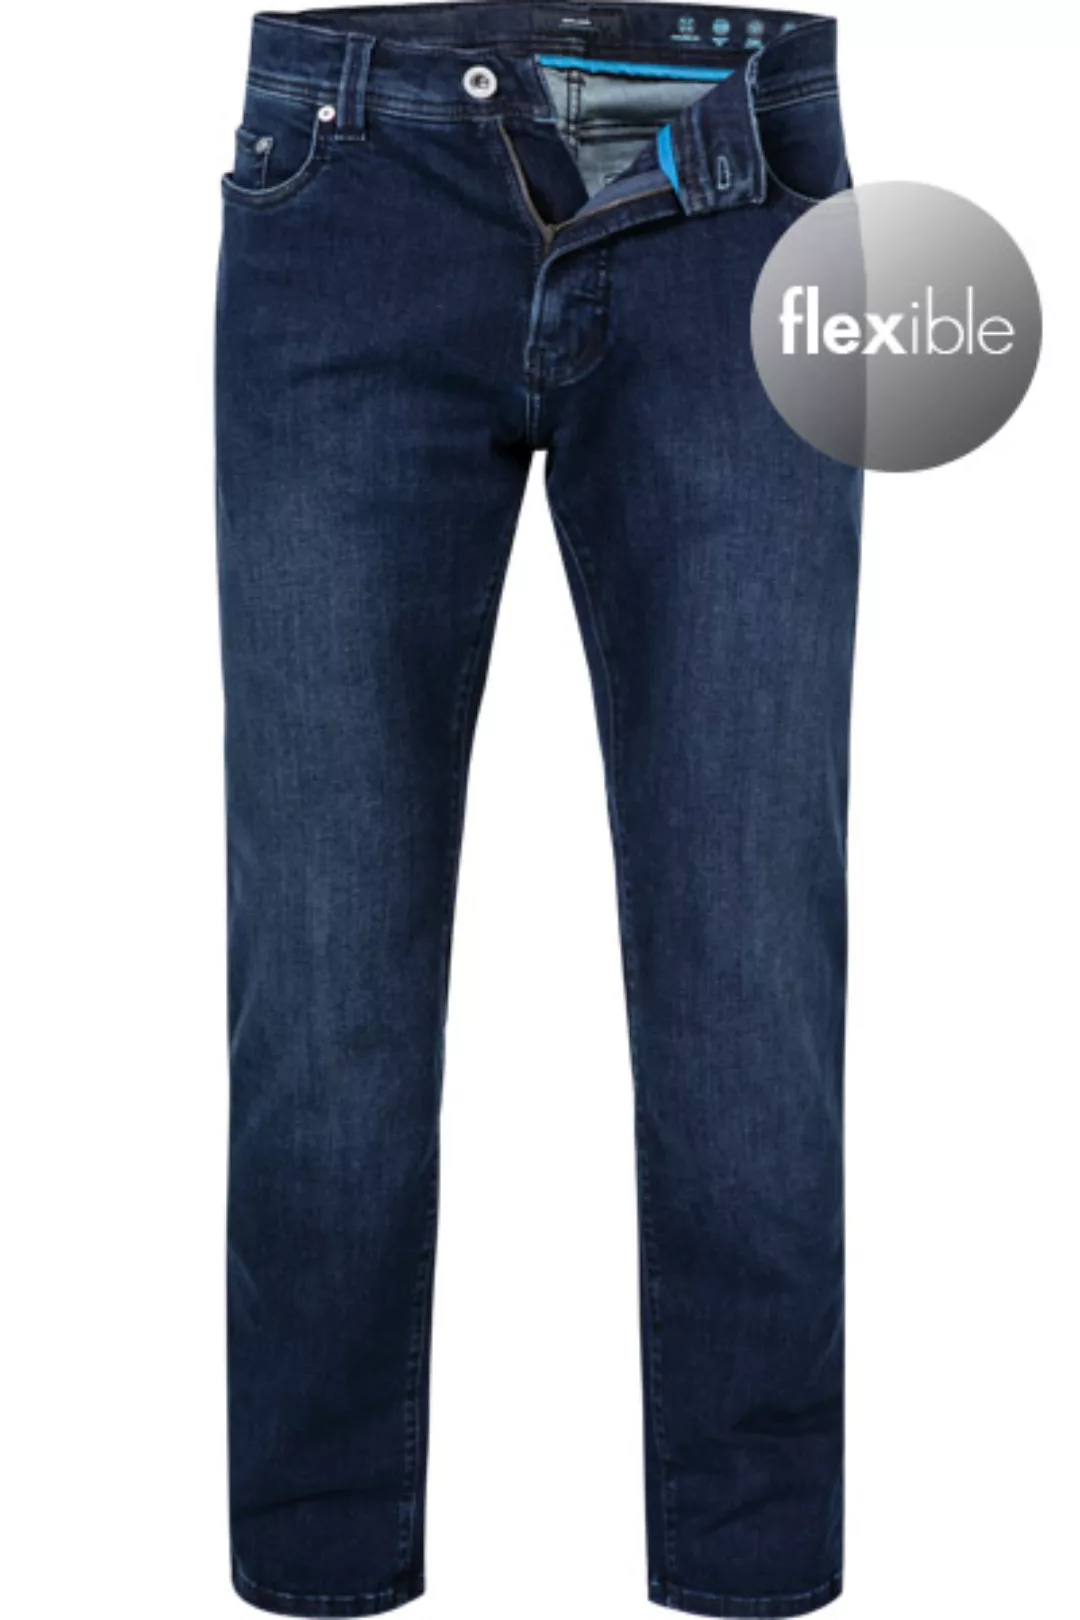 Pierre Cardin Jeans Lyon 03451/000/08820/03 günstig online kaufen